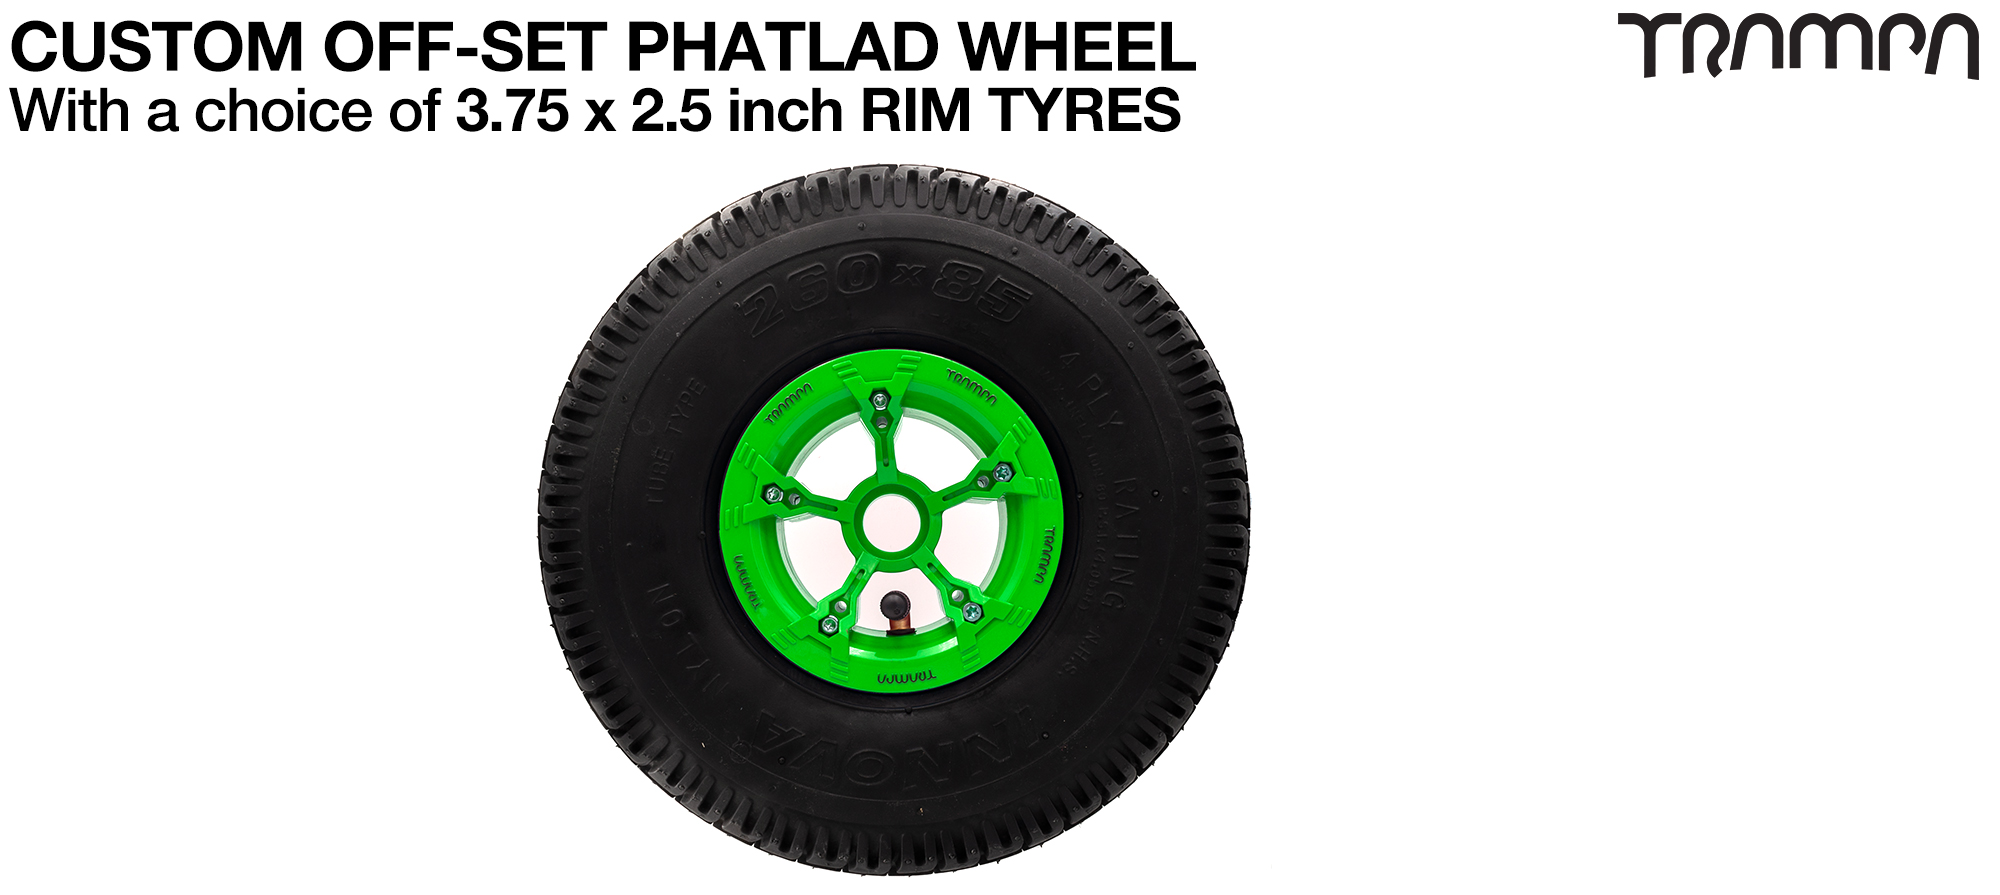 TRAMPA PHATLADS 5 spoke Off-Set Wheels - 10 Inch DURO TREAD Tyres 